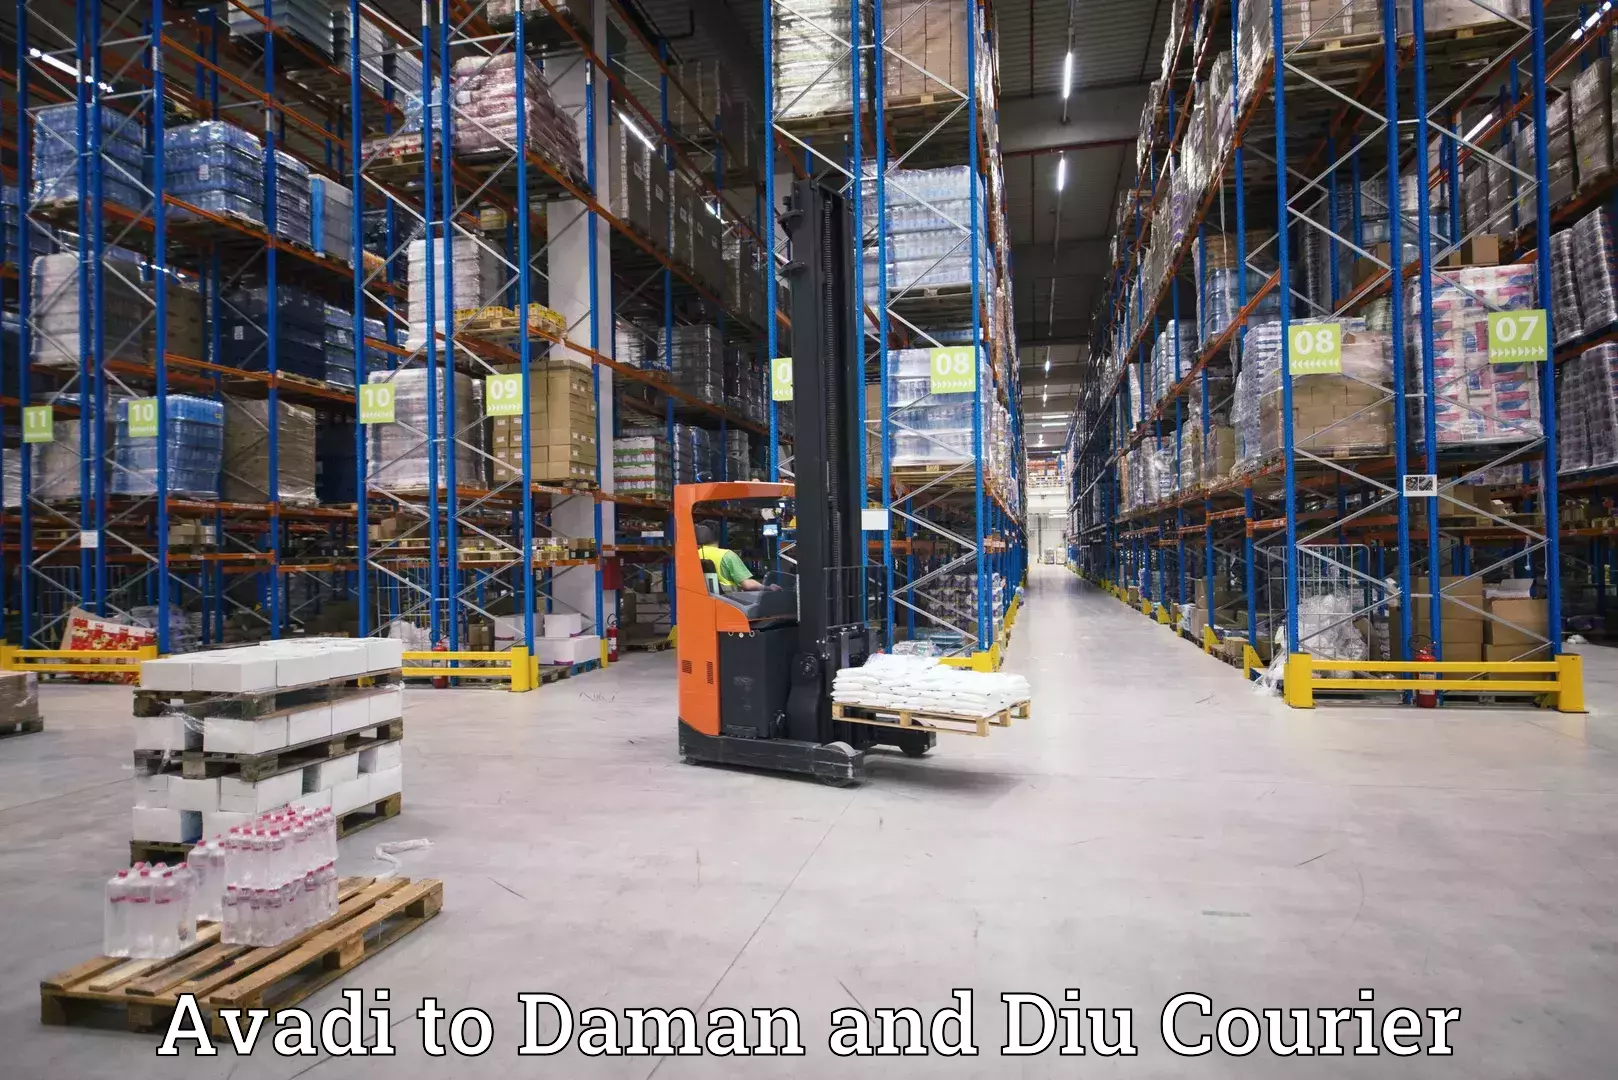 Courier service partnerships Avadi to Daman